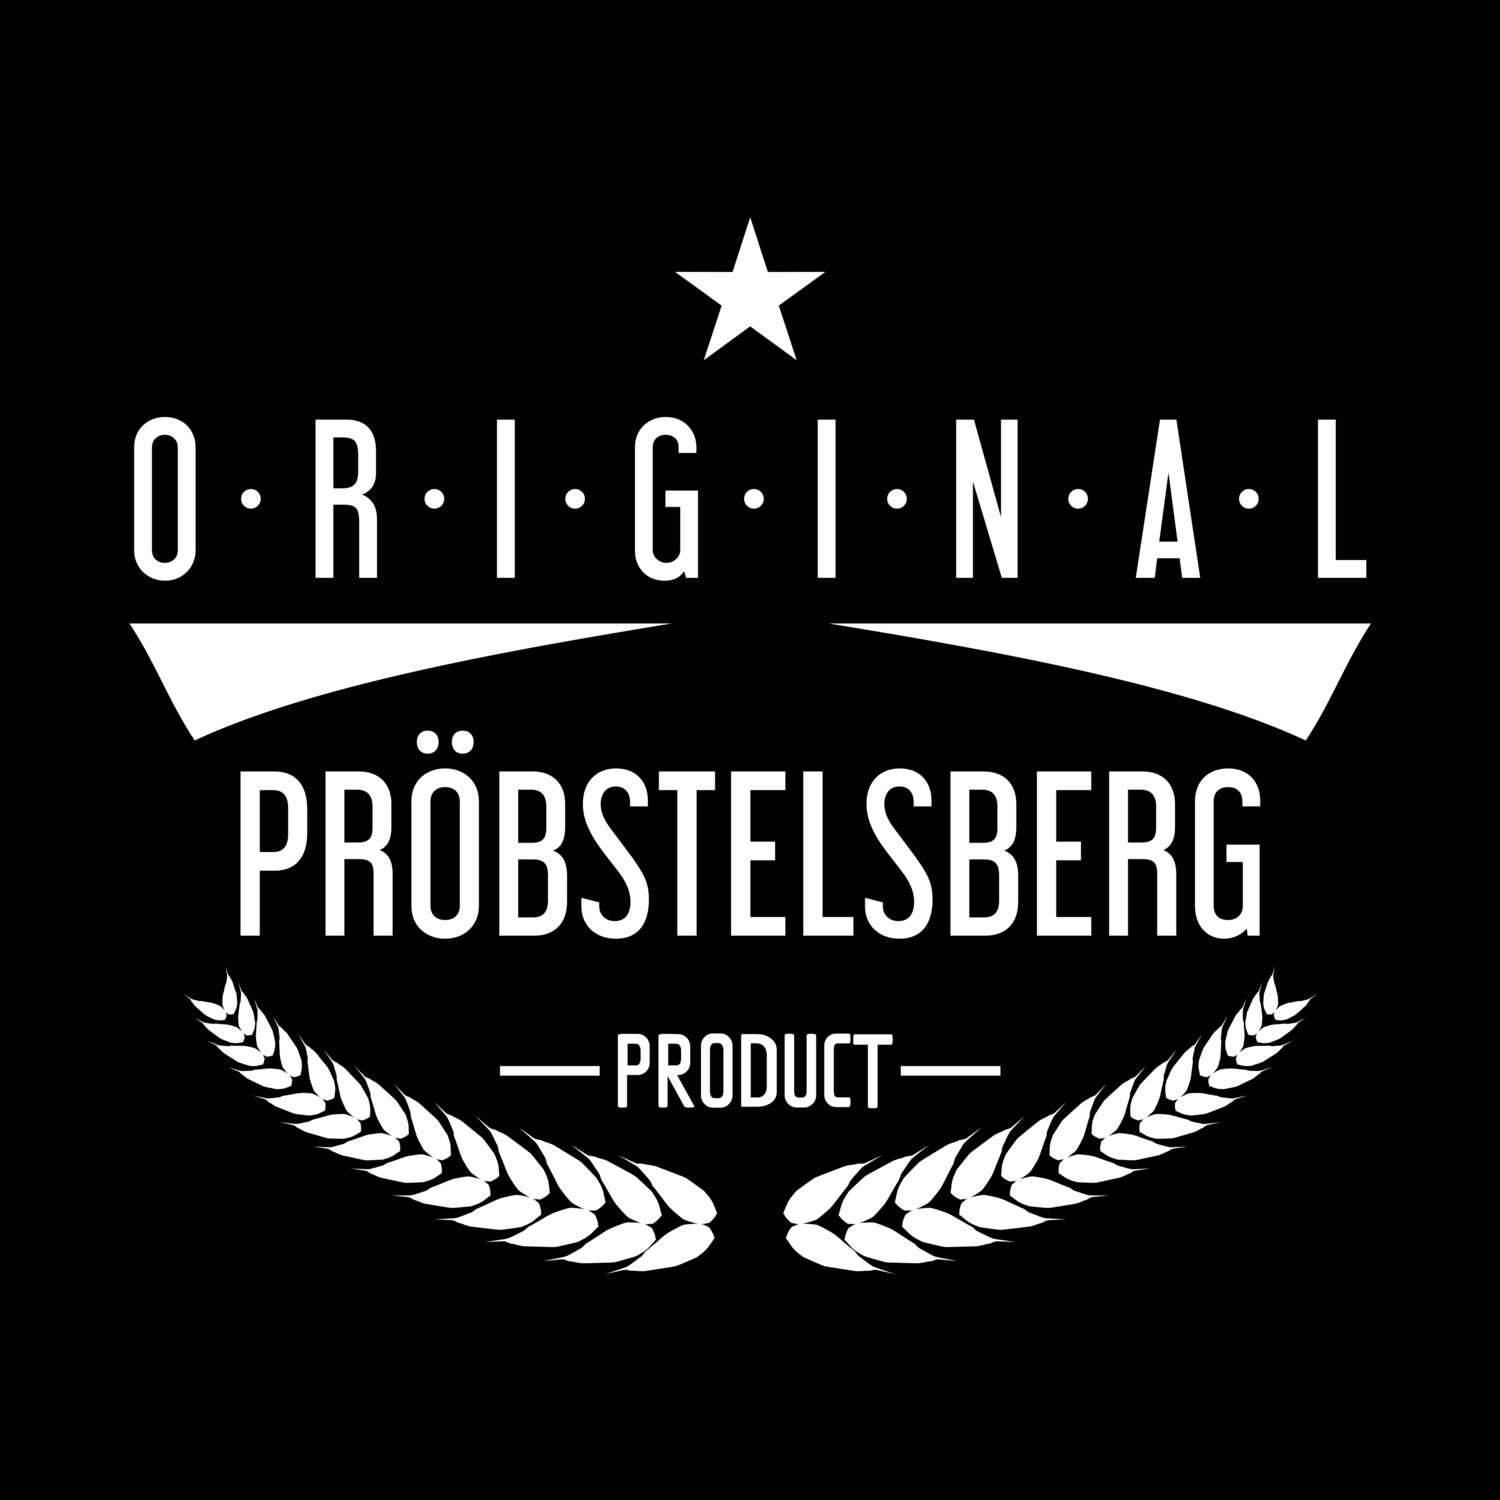 Pröbstelsberg T-Shirt »Original Product«